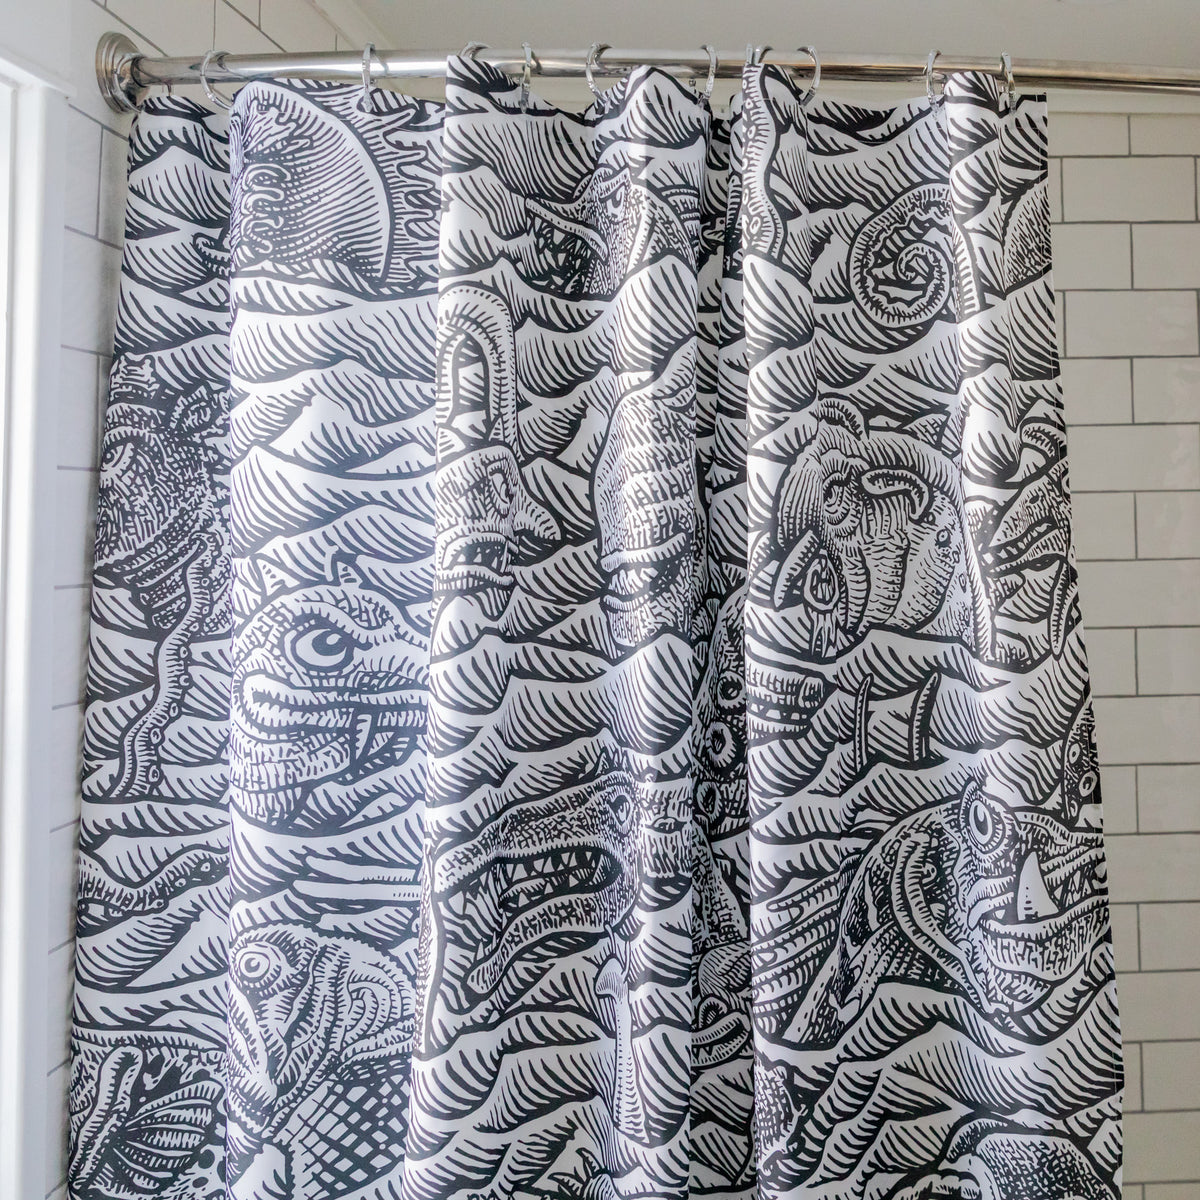 Sea Monster Shower Curtain